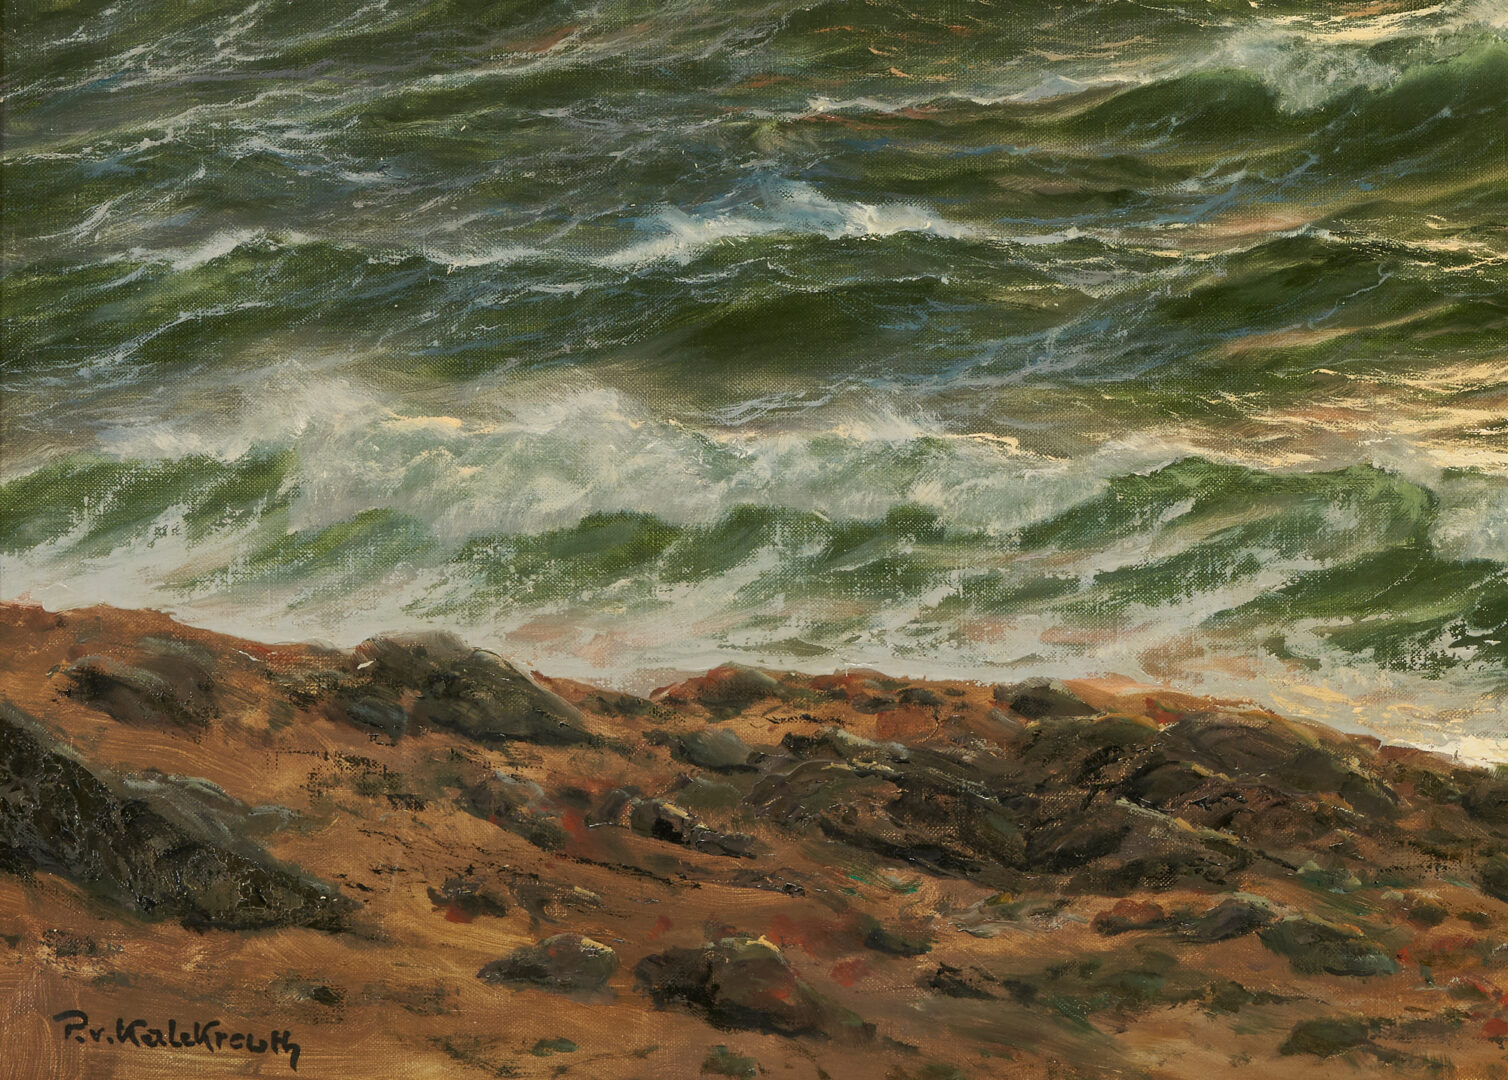 Lot 402: Patrick von Kalckreuth Large O/C Marine Landscape Painting